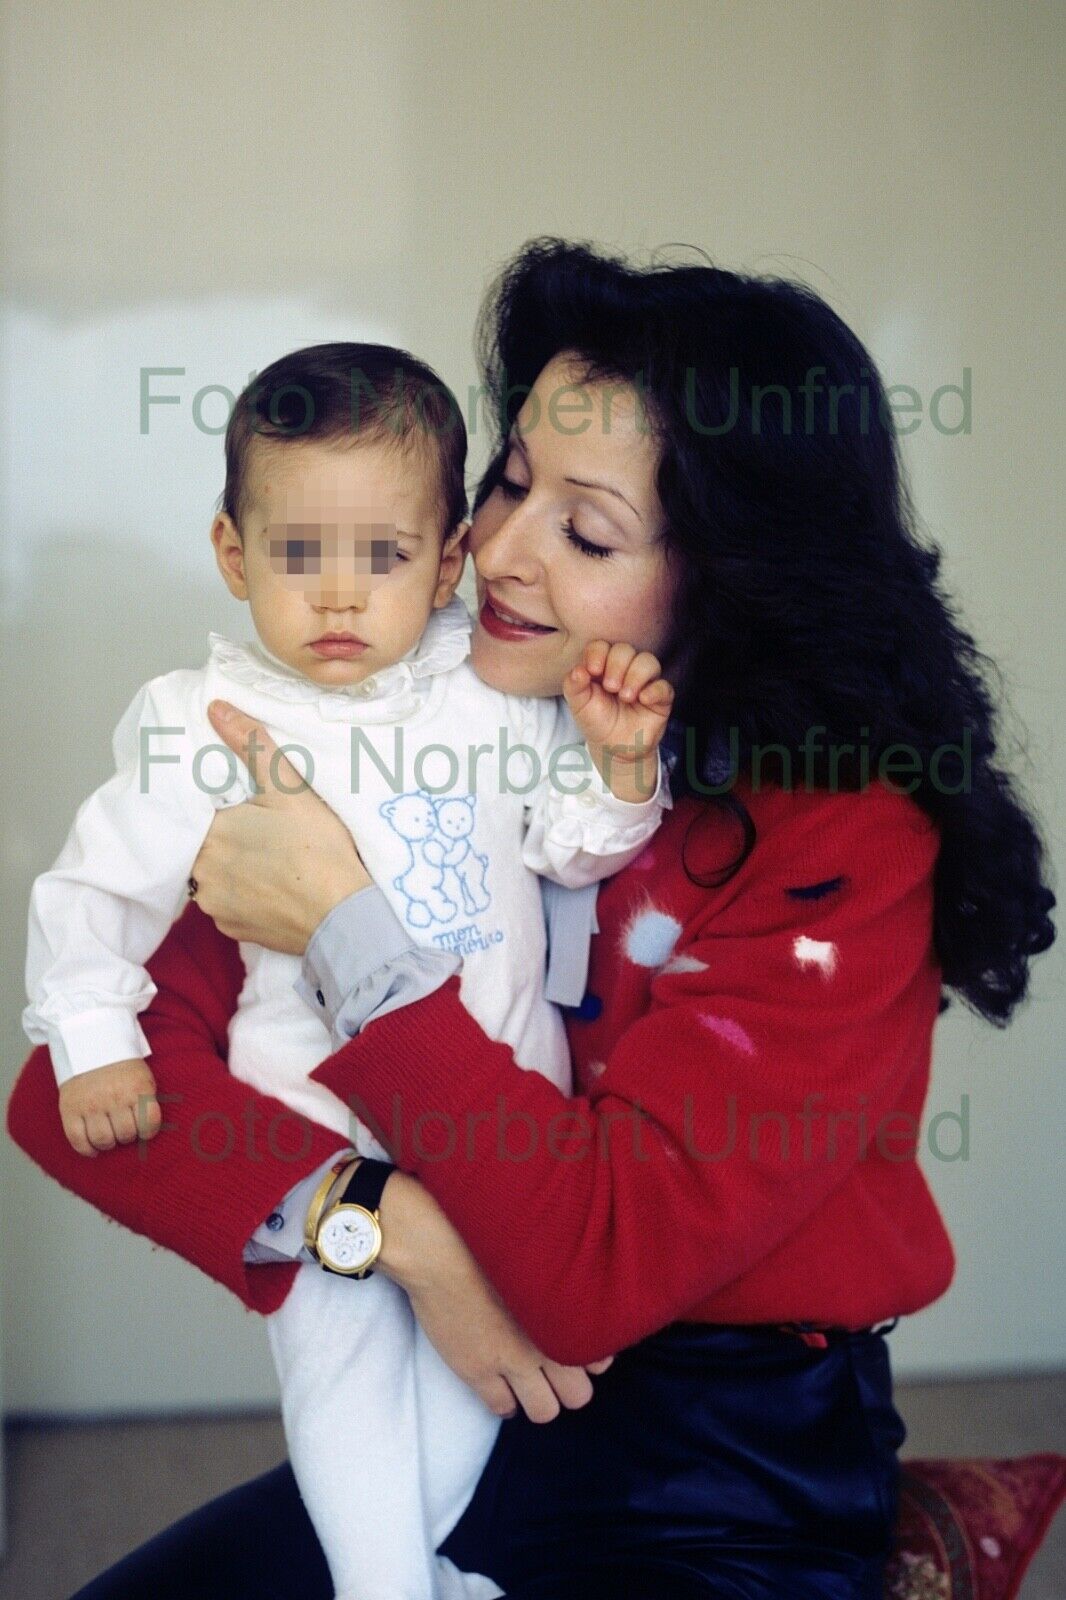 Vicky Leandros mit Kind - Foto 20 x 30 cm ohne Autogramm (Nr 2-336